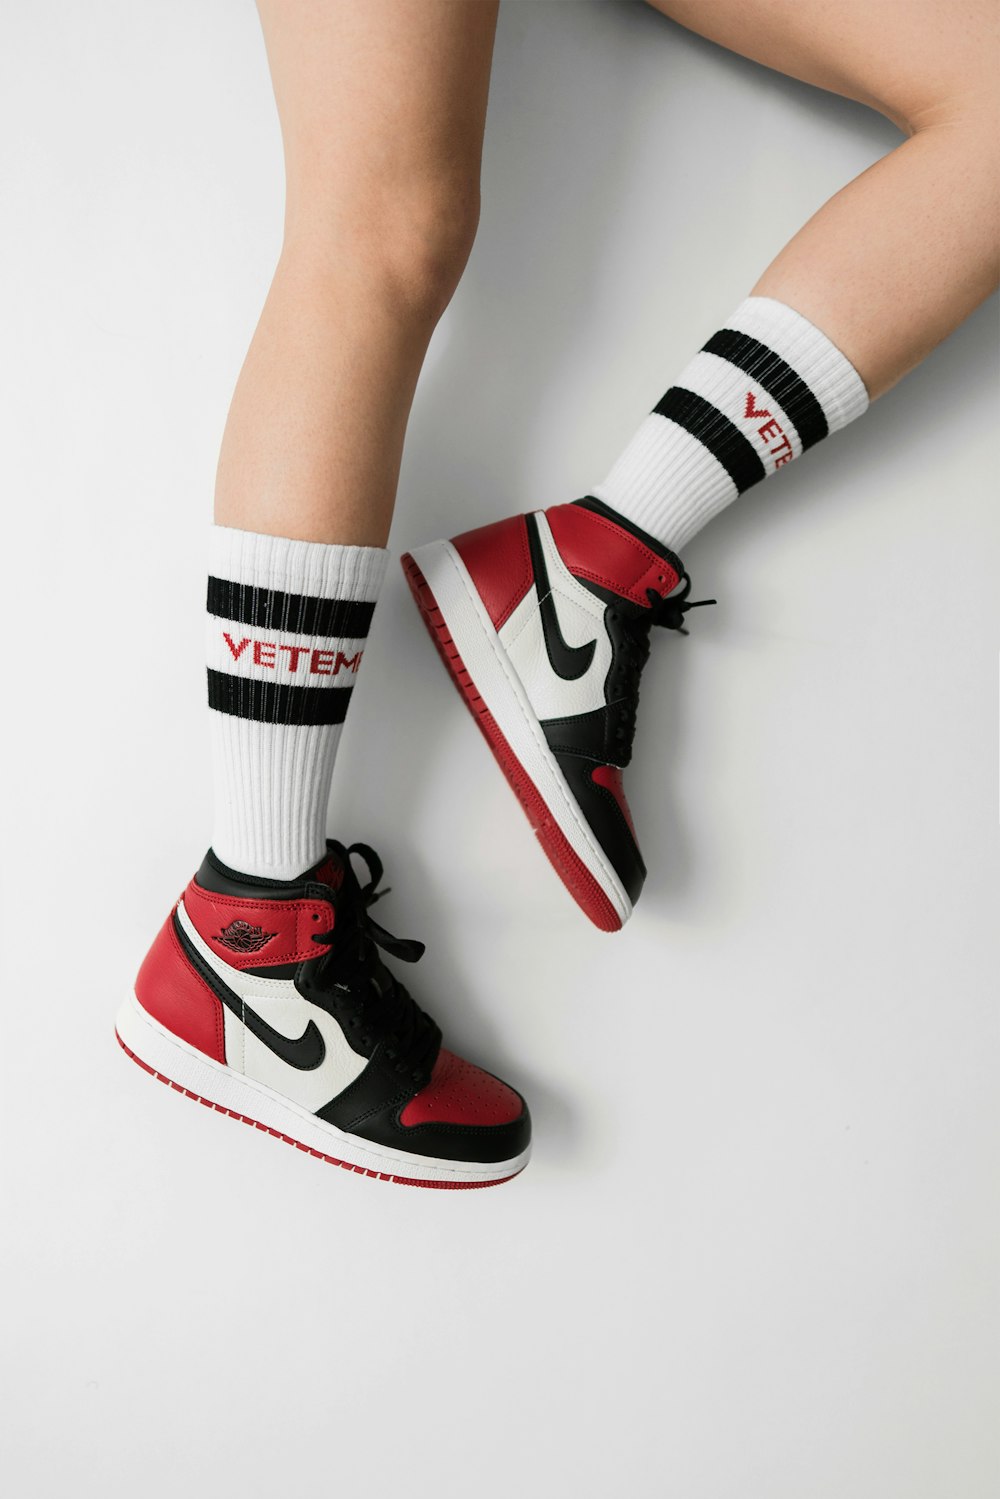 Nike Air Jordan Pictures | Download Free Images on Unsplash